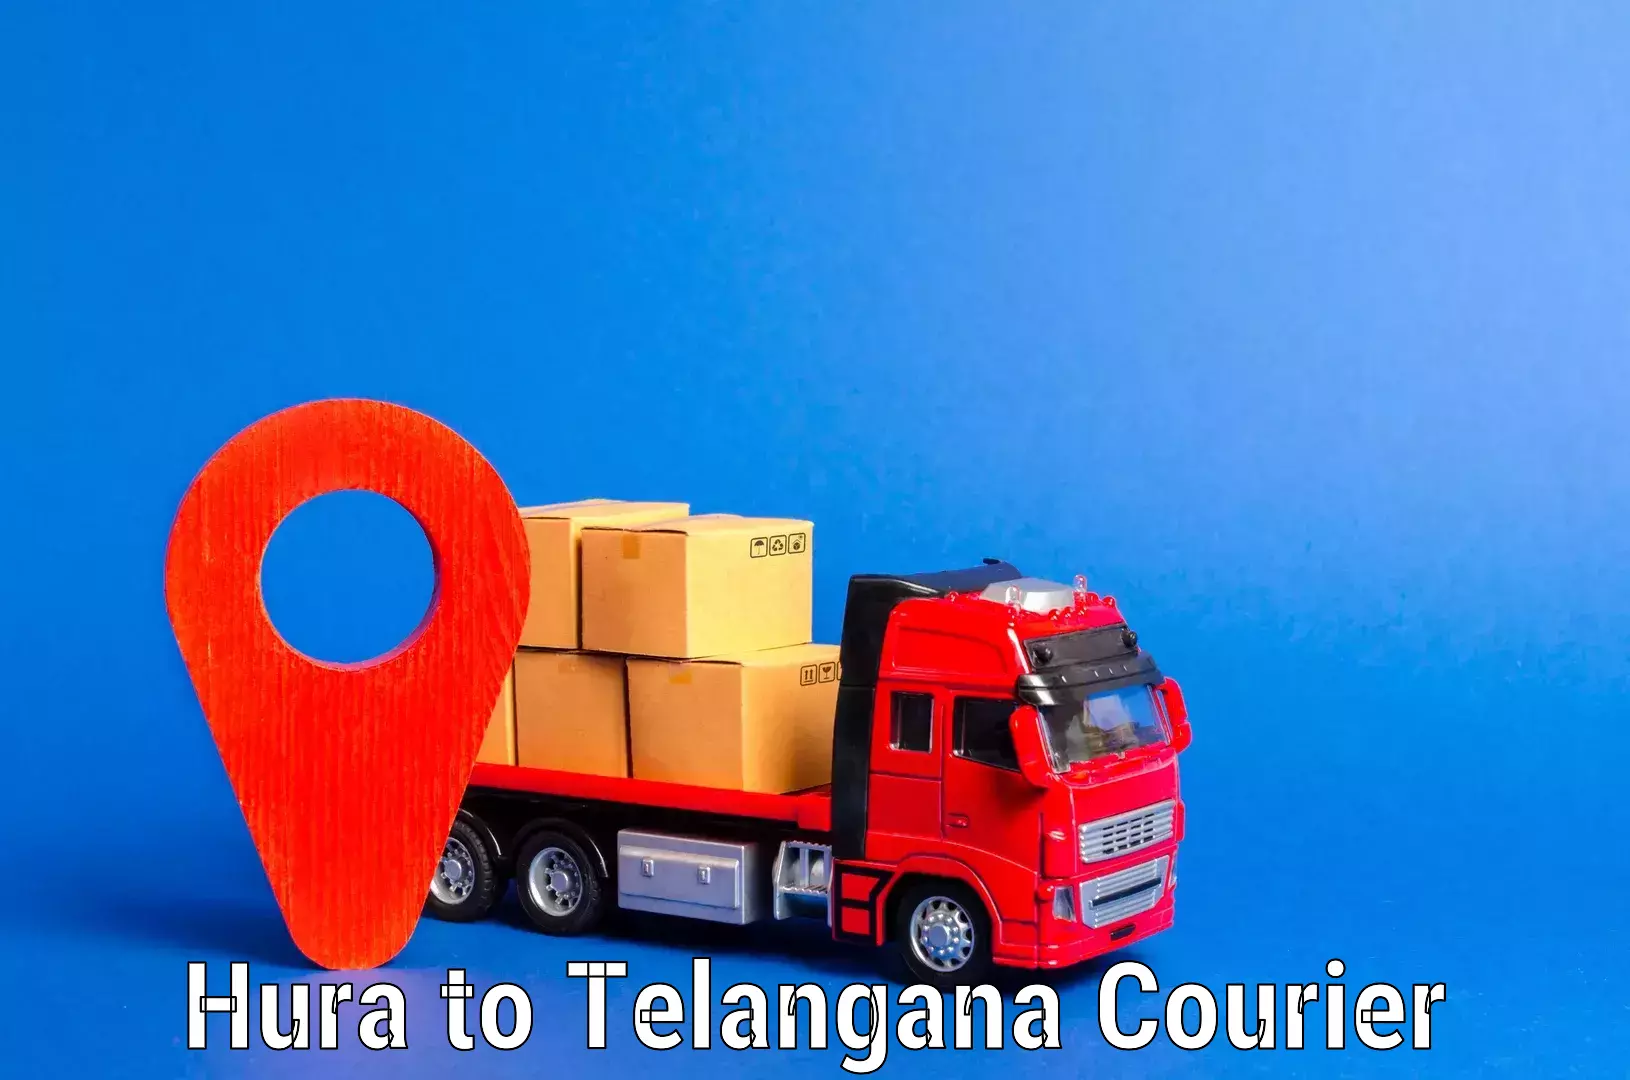 Residential moving experts Hura to Telangana